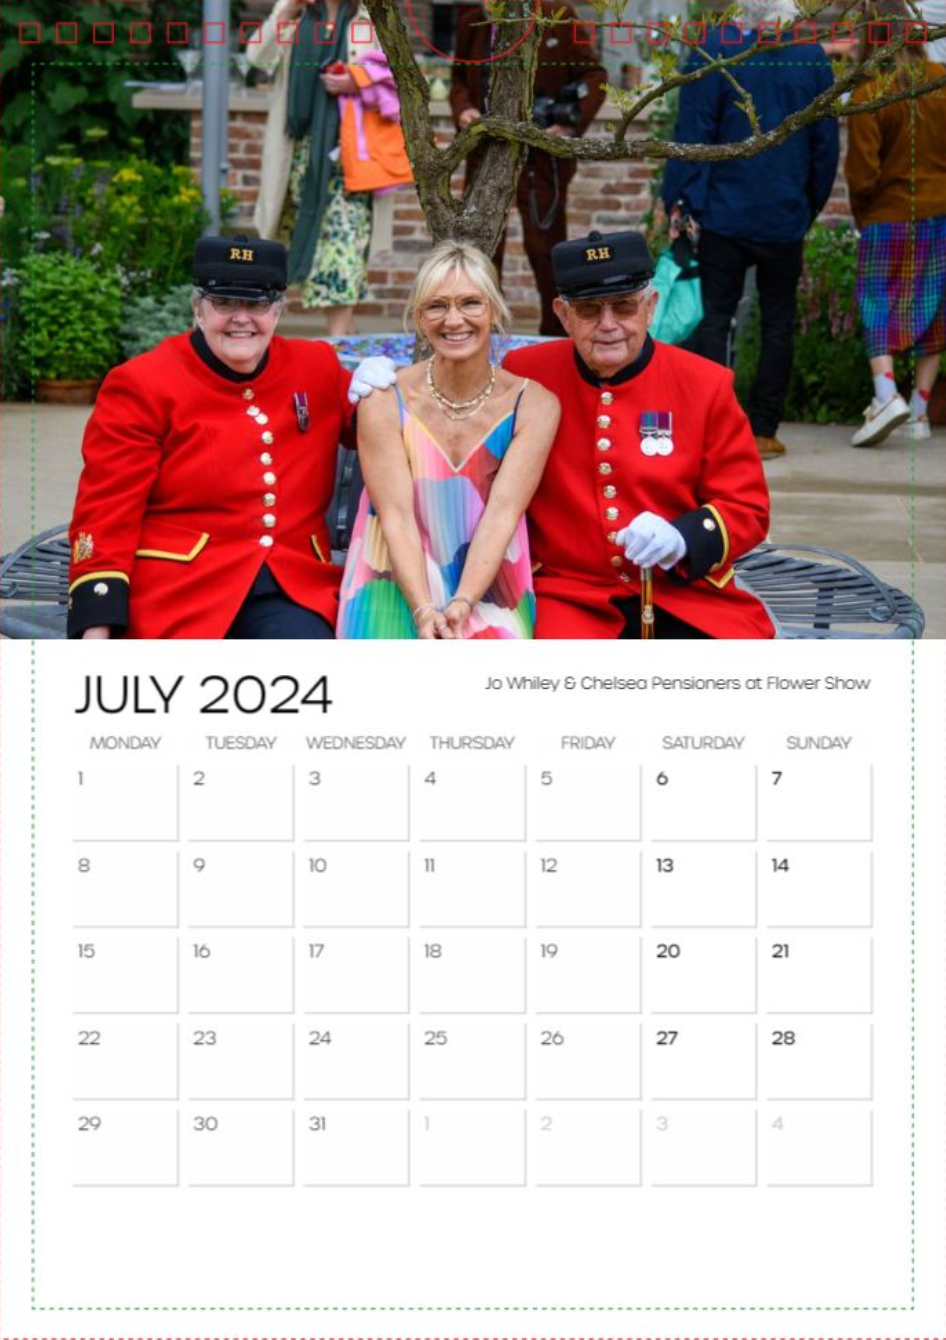 Photographic Calendar 2024 - July